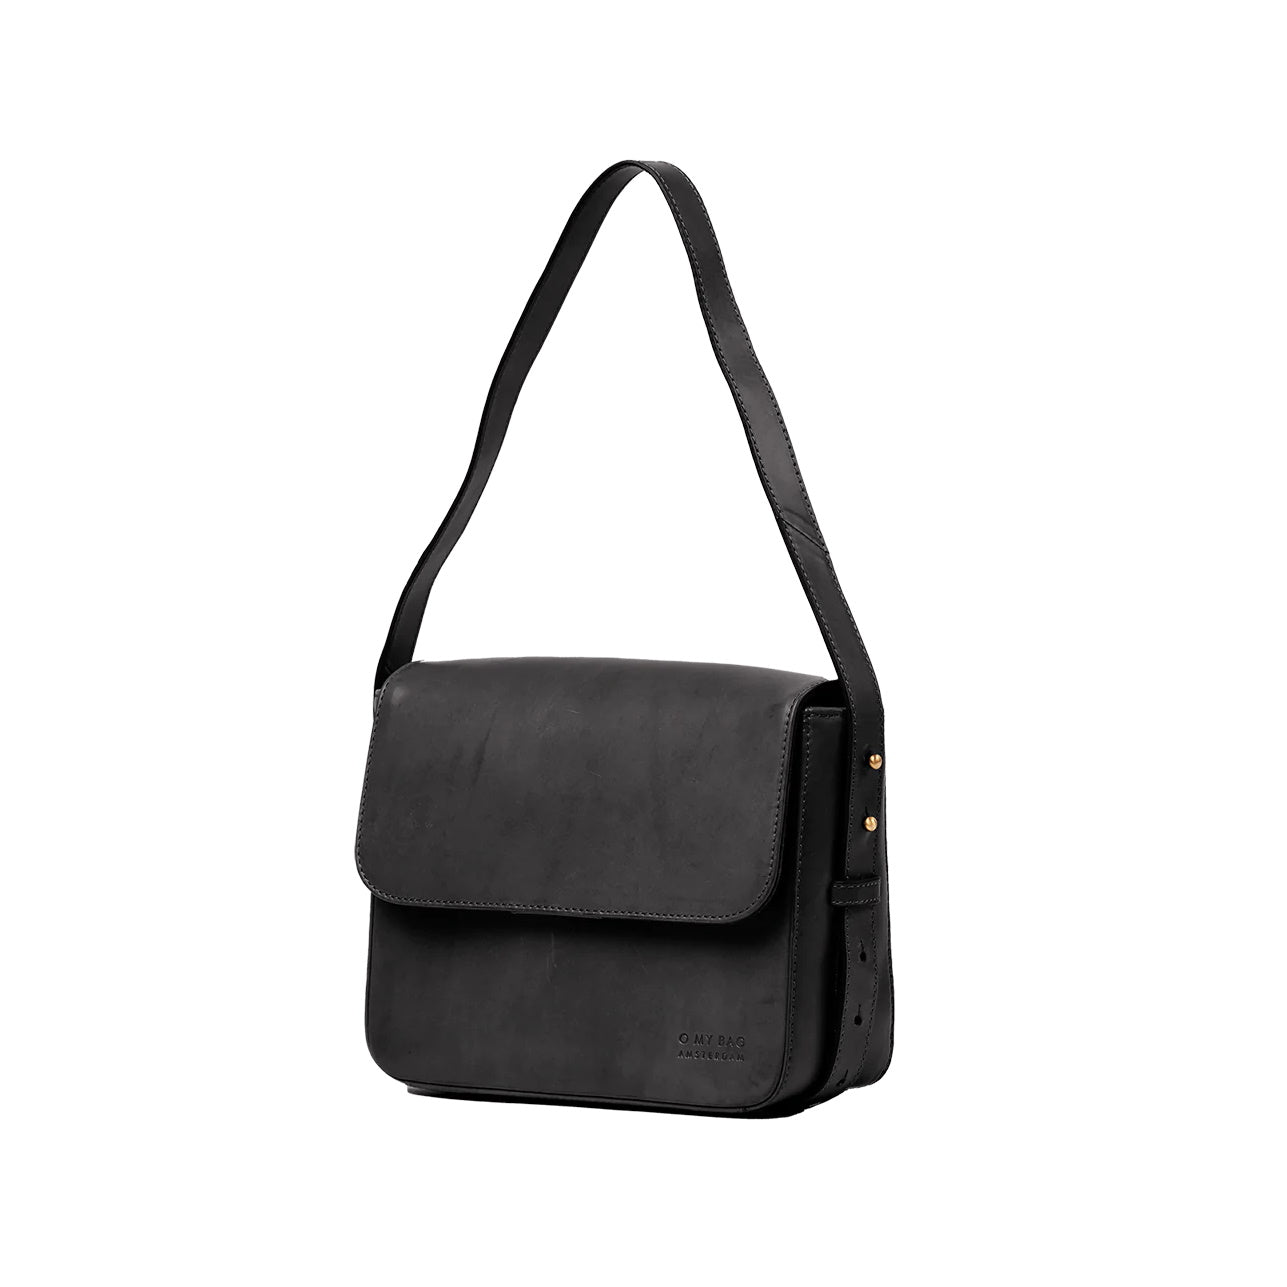 O My Bag Gina handtas zwart - Damplein 9 SKI & Mode